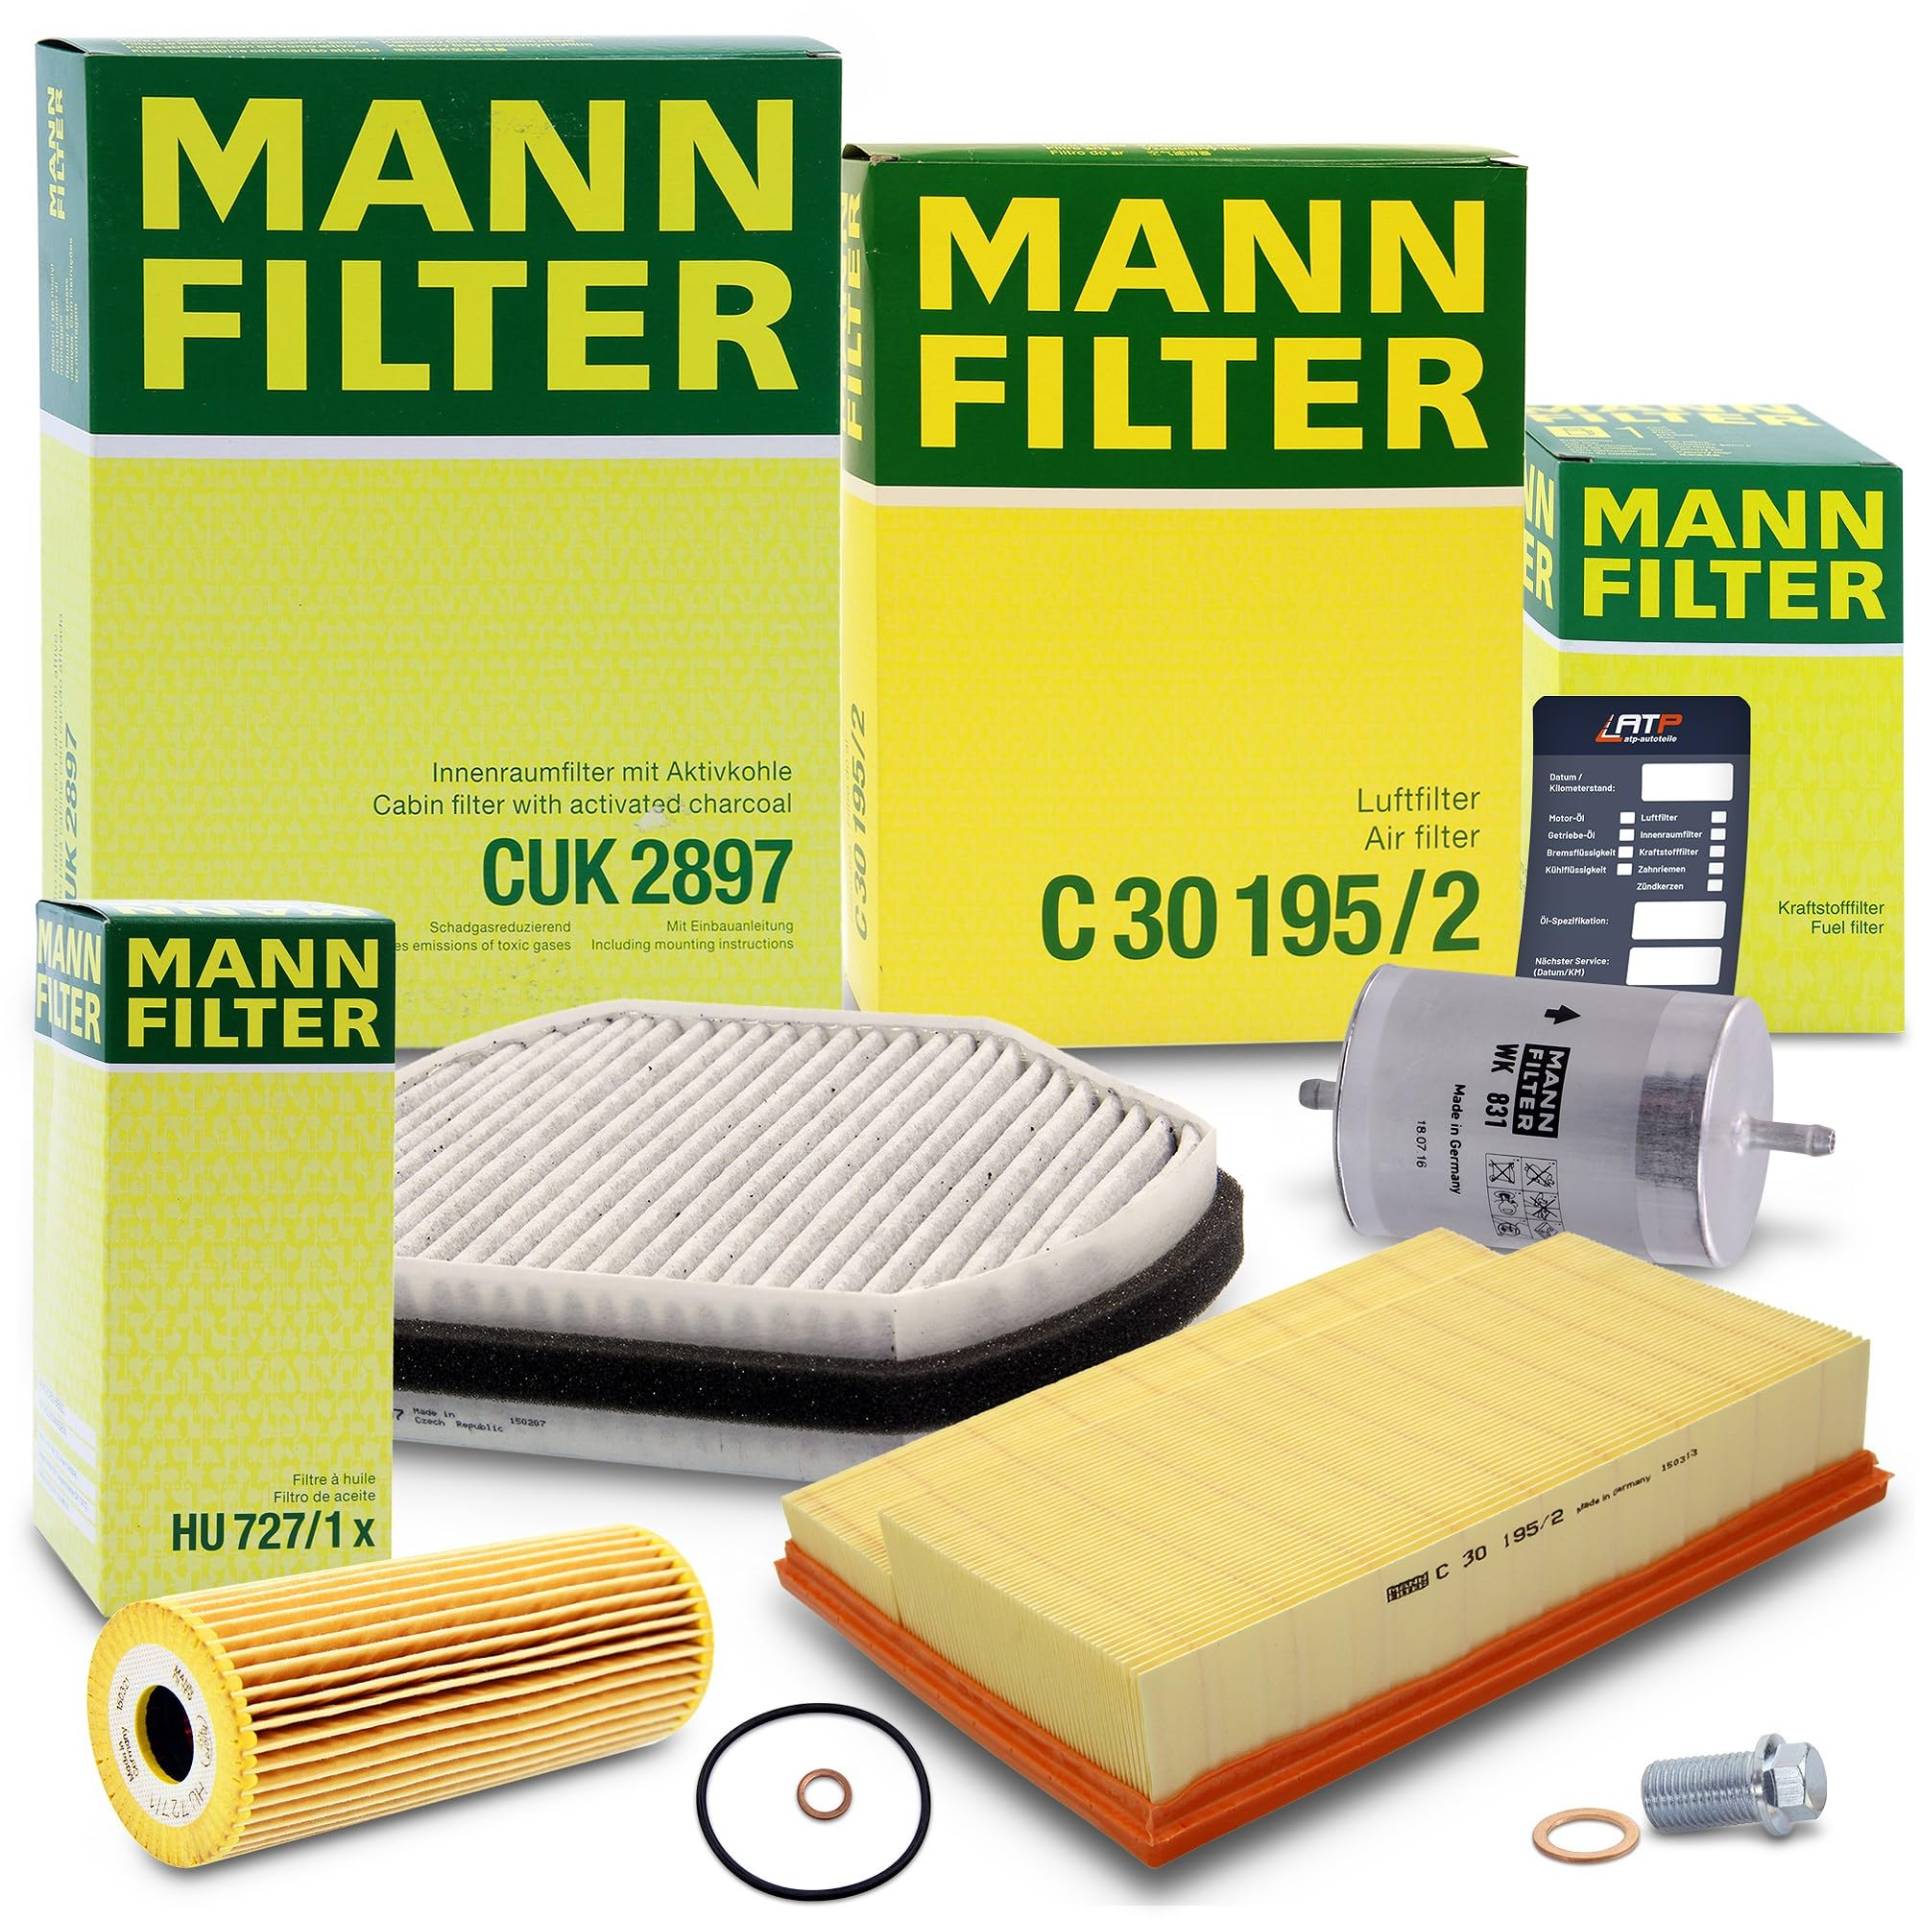 1x MANN-FILTER Ölfilter, 1x MANN-FILTER Luftfilter, 1x MANN-FILTER Innenraumfilter (Aktivkohlefilter), 1x MANN-FILTER Kraftstofffilter Kompatibel mit MERCEDES C-Klasse (W202)(S202), CLK (C208)(A208) von MANN-FILTER